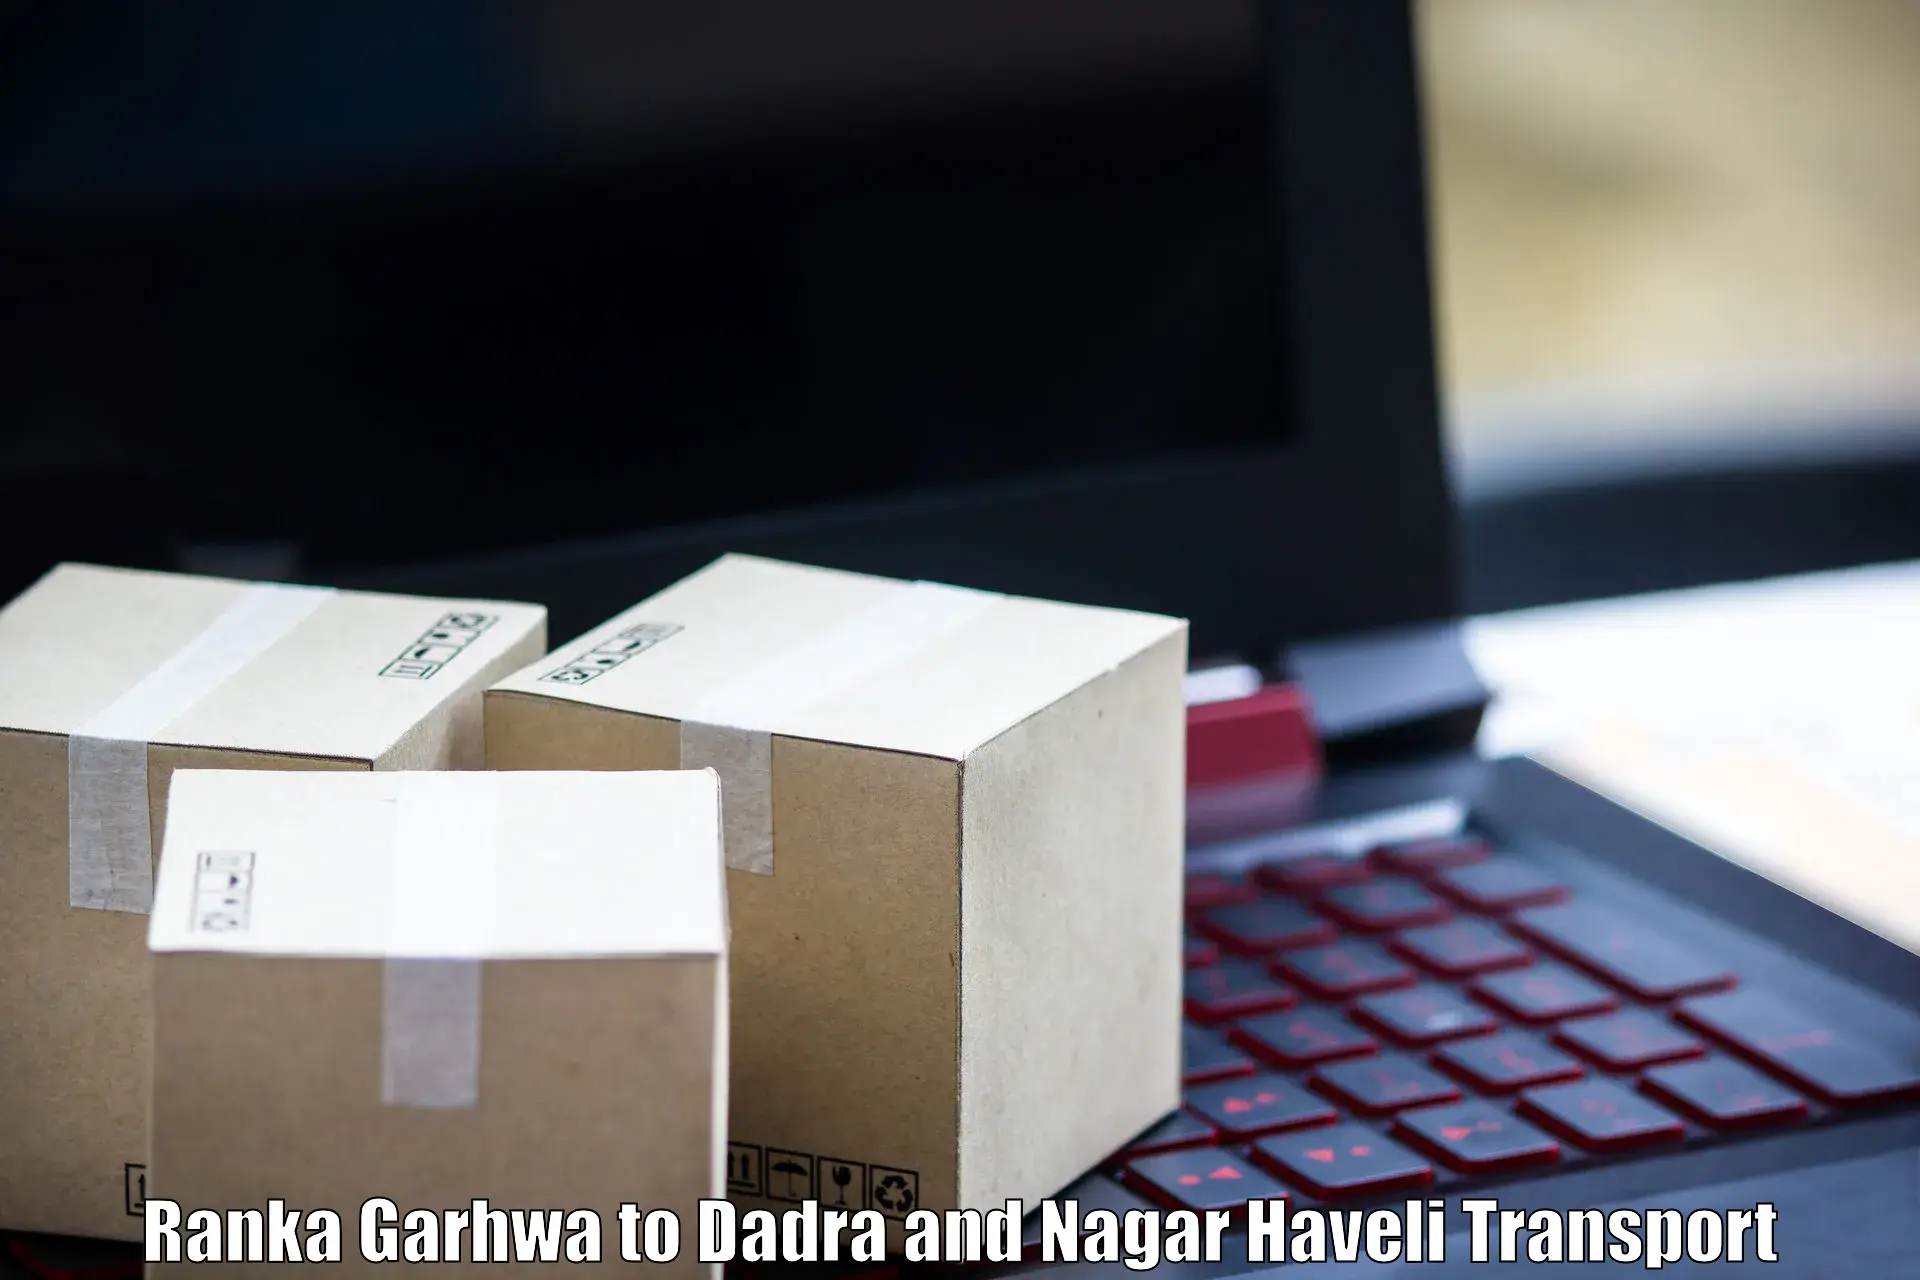 Truck transport companies in India Ranka Garhwa to Dadra and Nagar Haveli